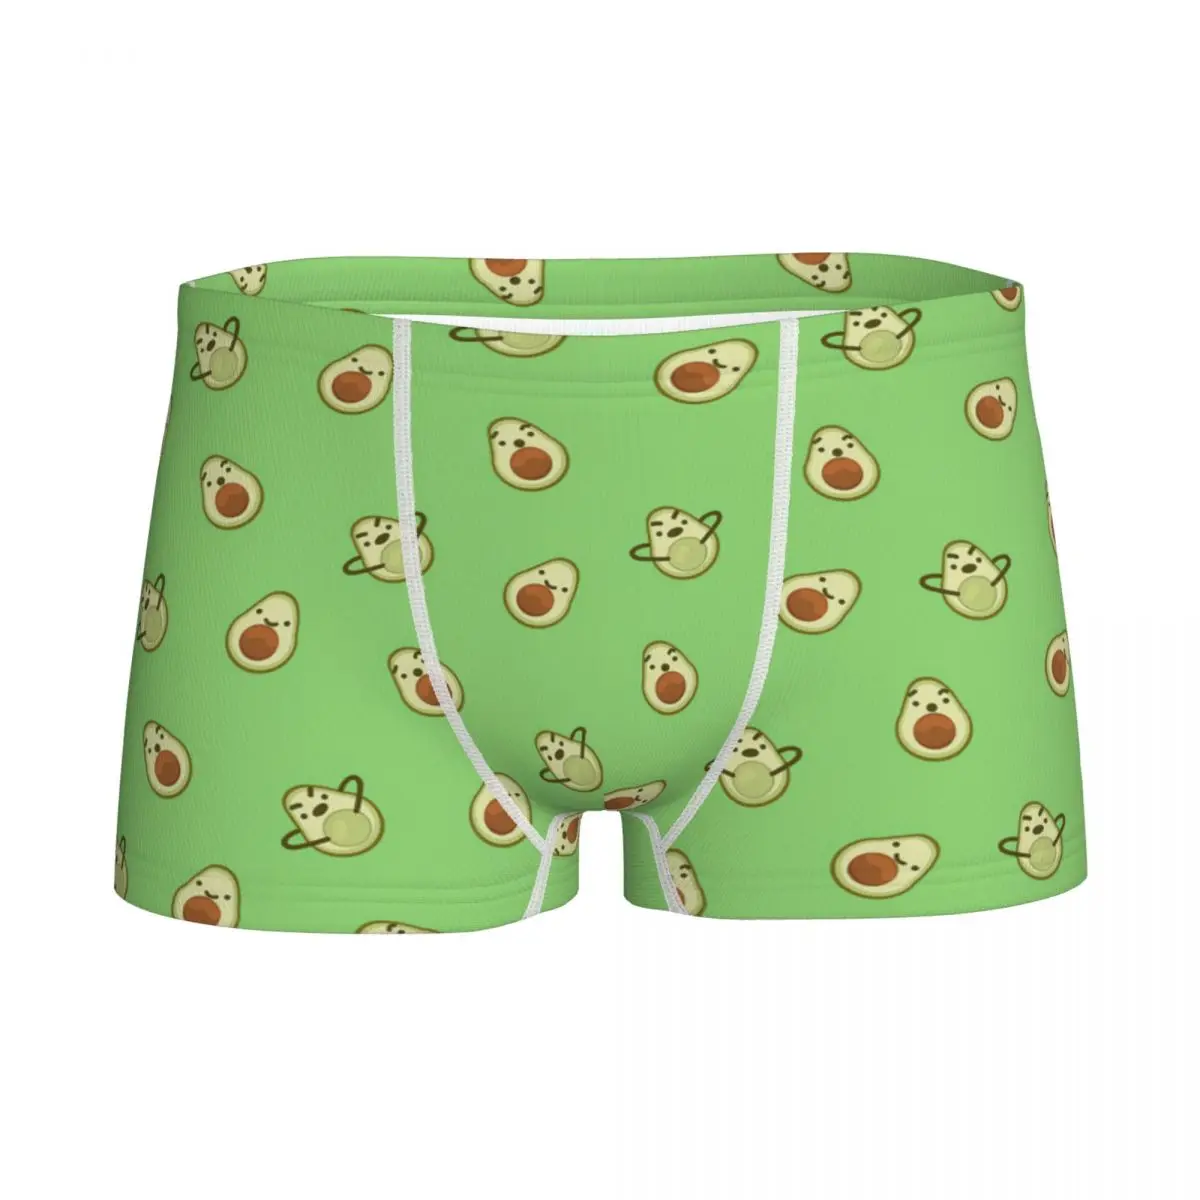 

Boys Green Avocado Cartoon Boxers Cotton Youth Underwear Avocados Lover Man Shorts Panties Funny Teenagers Underpants